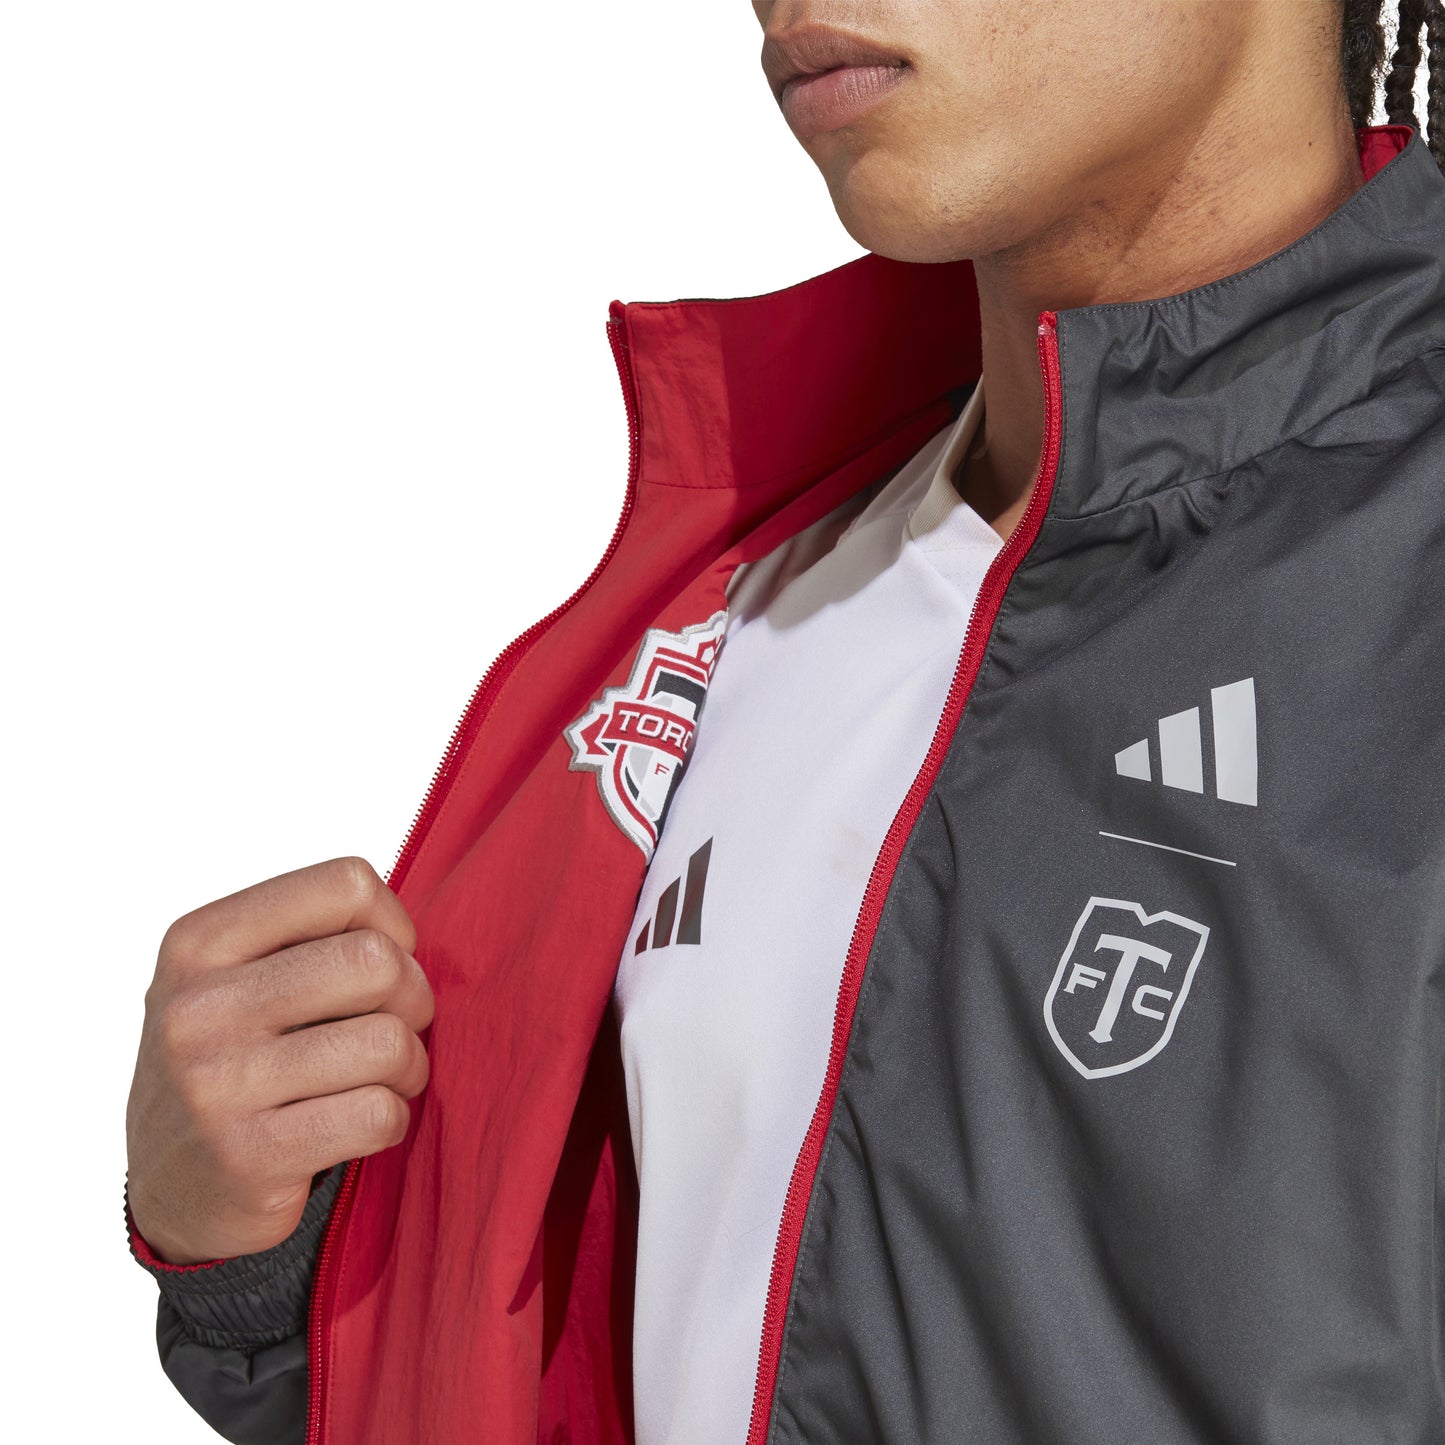 Adidas Toronto FC Anthem Jacket